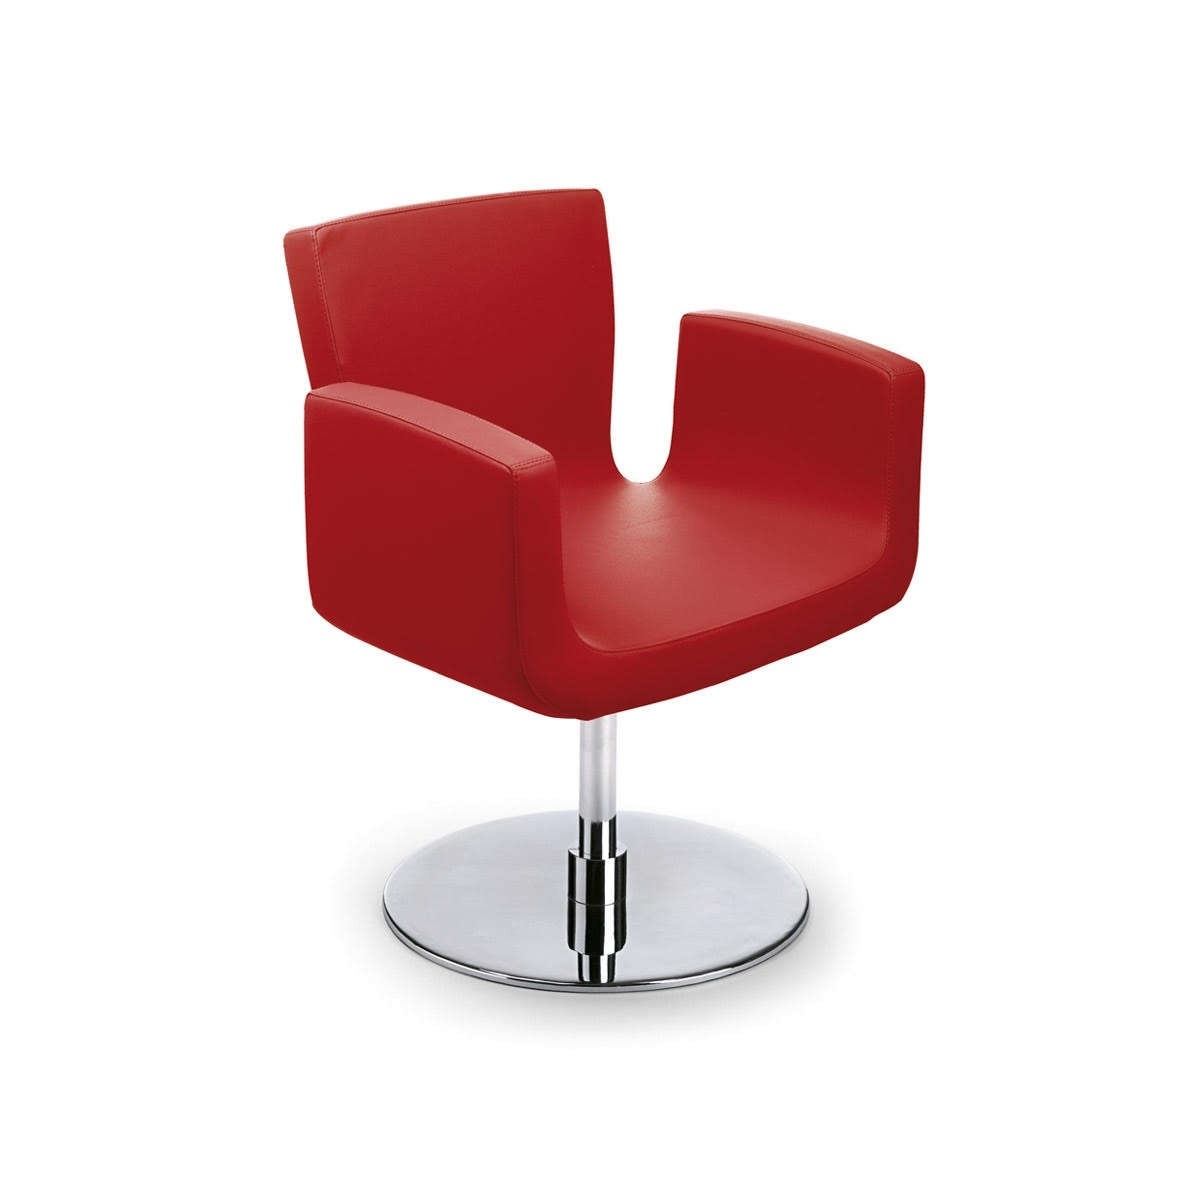 Barbizon Styling Chair by Gamma & Bross Spa